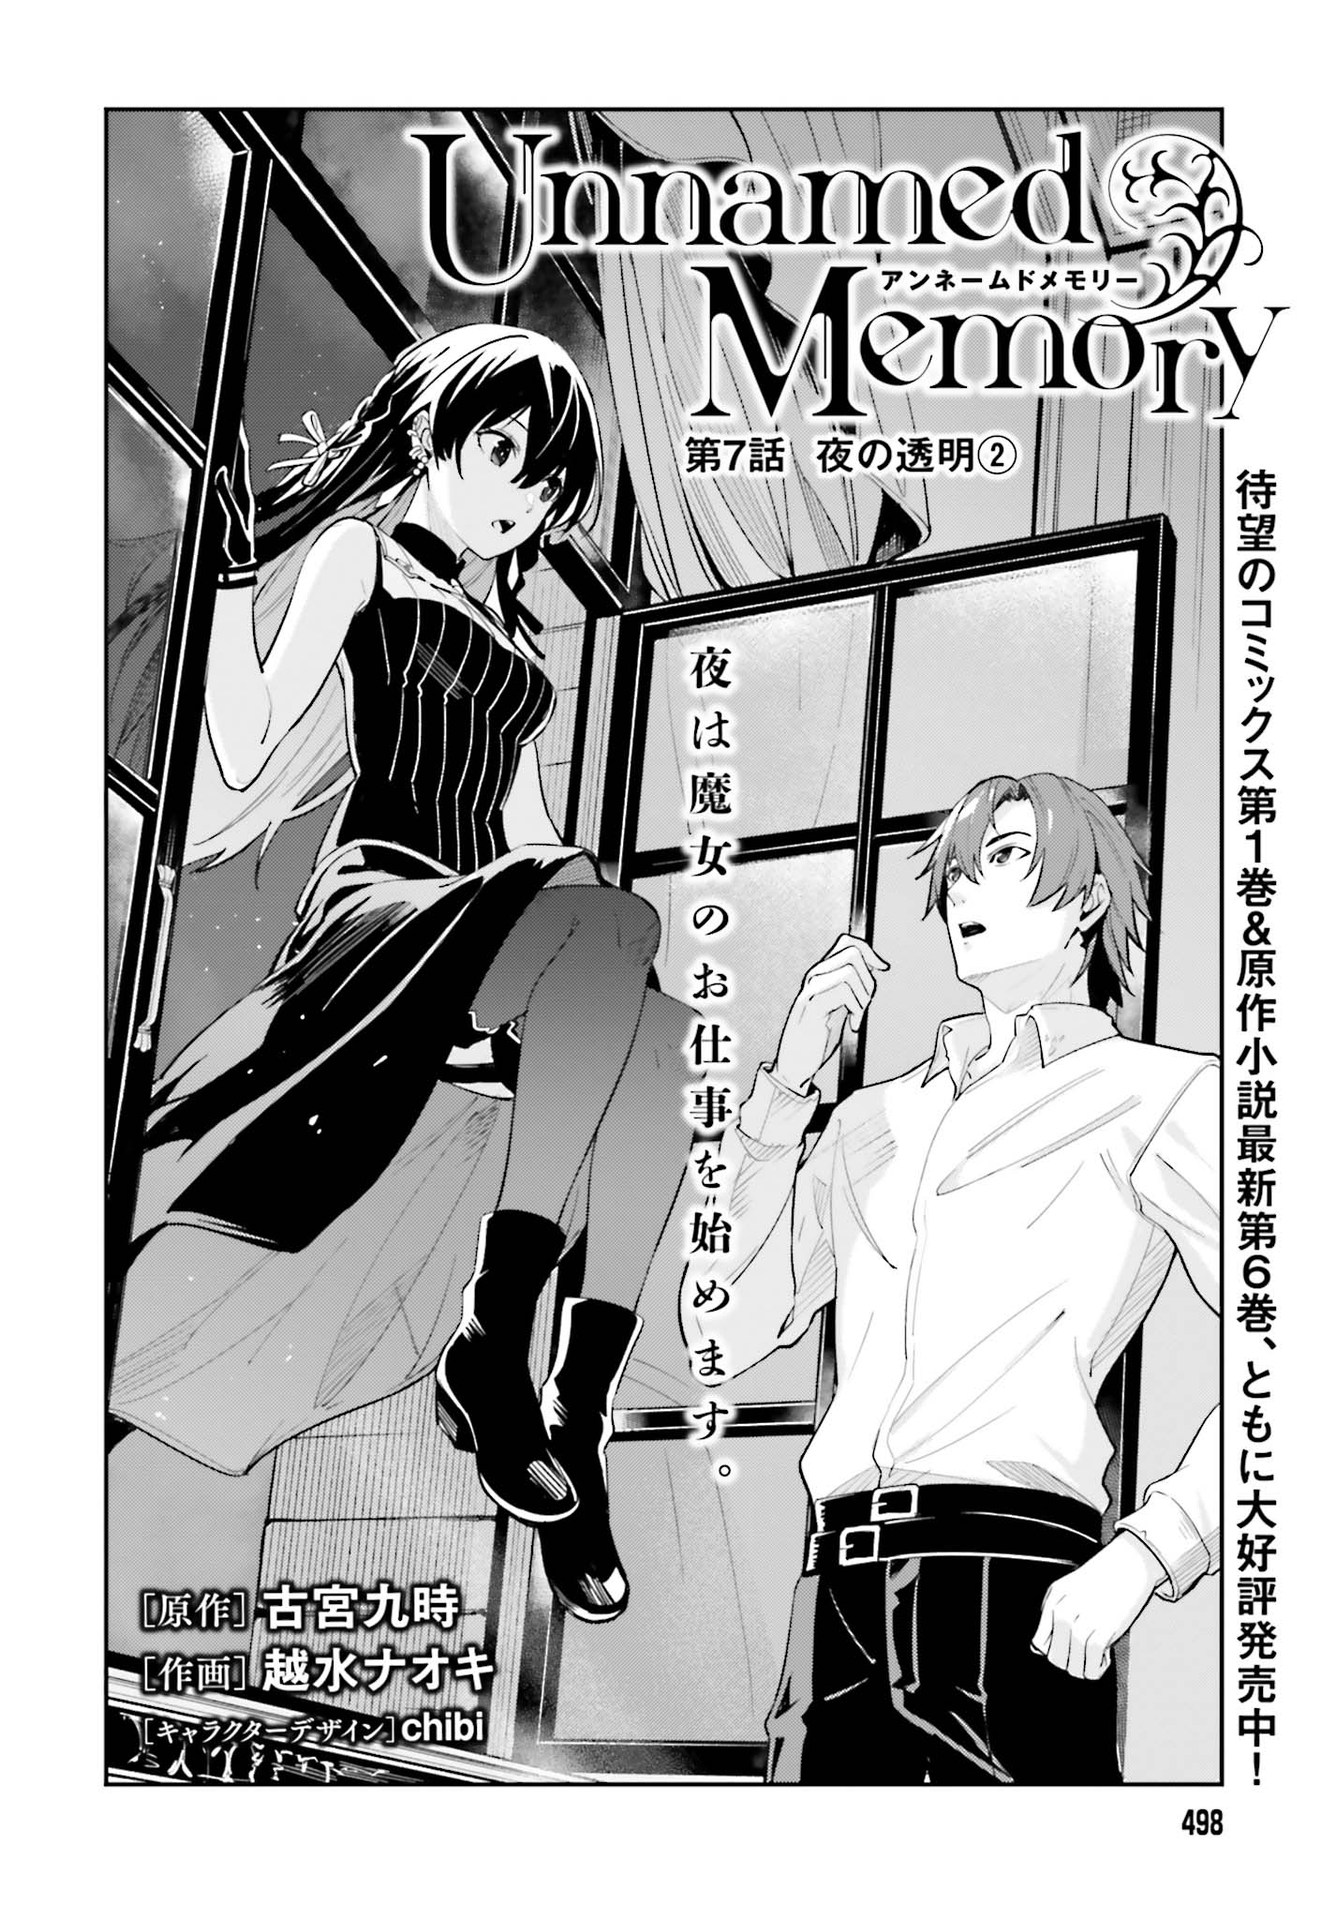 Unnamed Memory (manga) 第7話 - Page 2